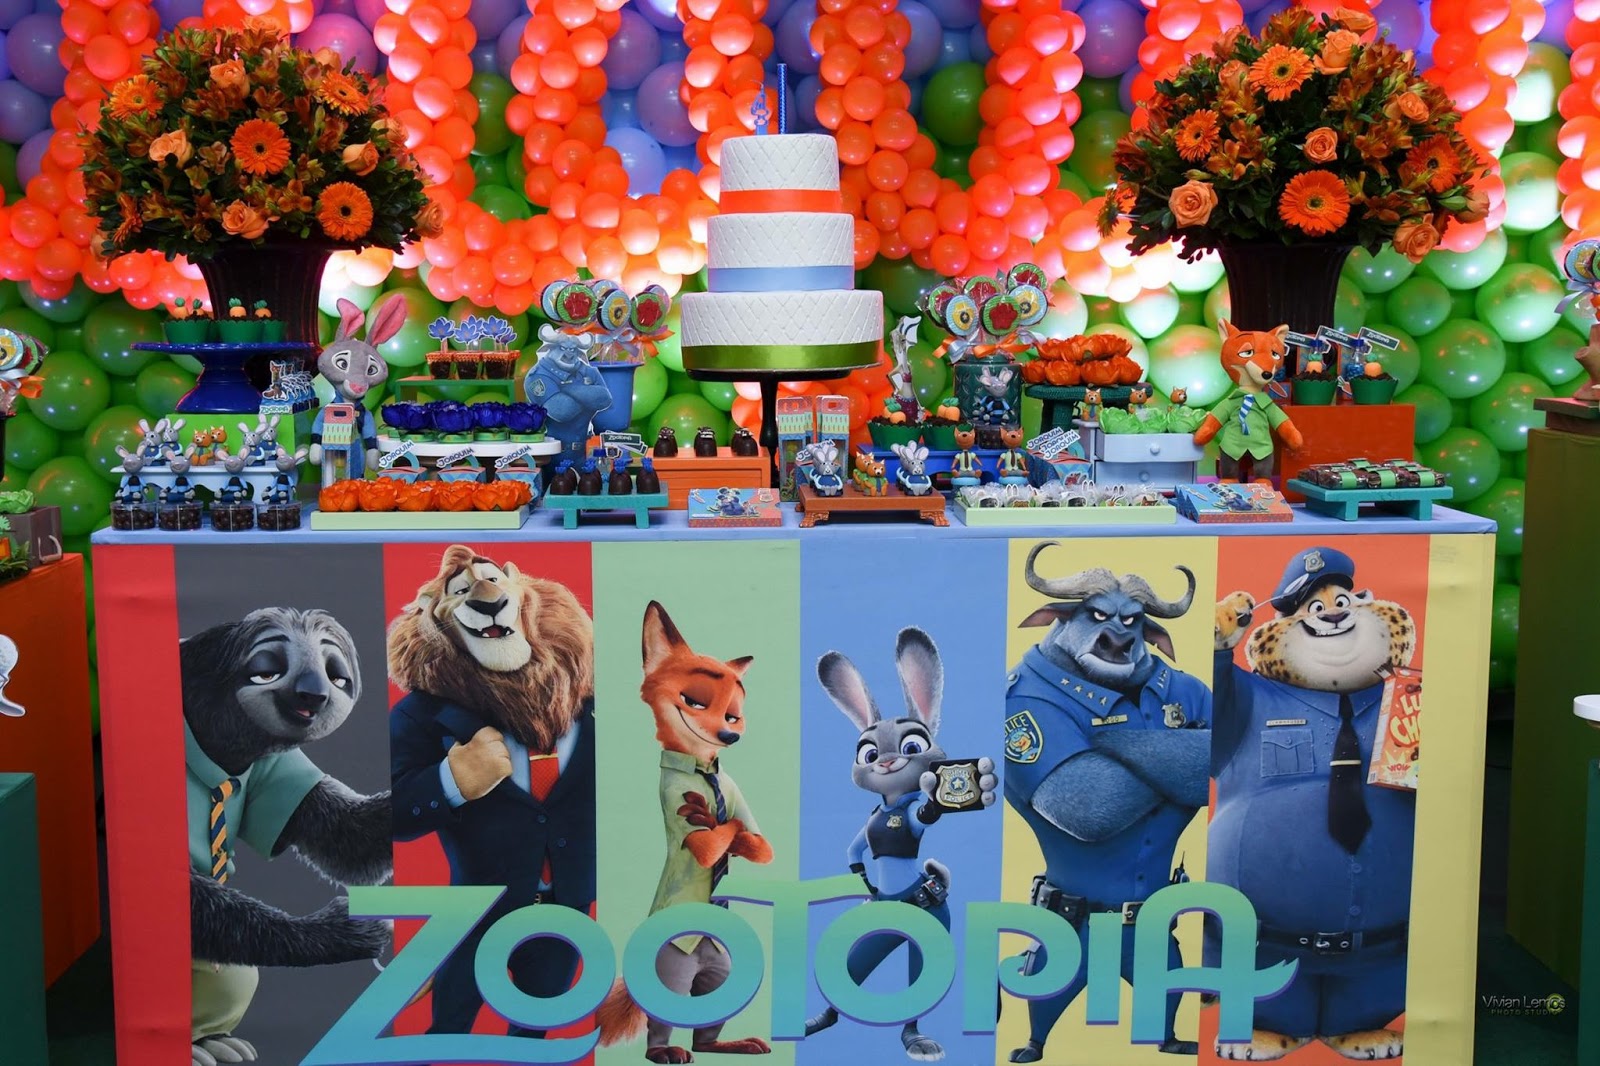 Disney zootopia 2 tema festa de aniversário decoração zootropolis